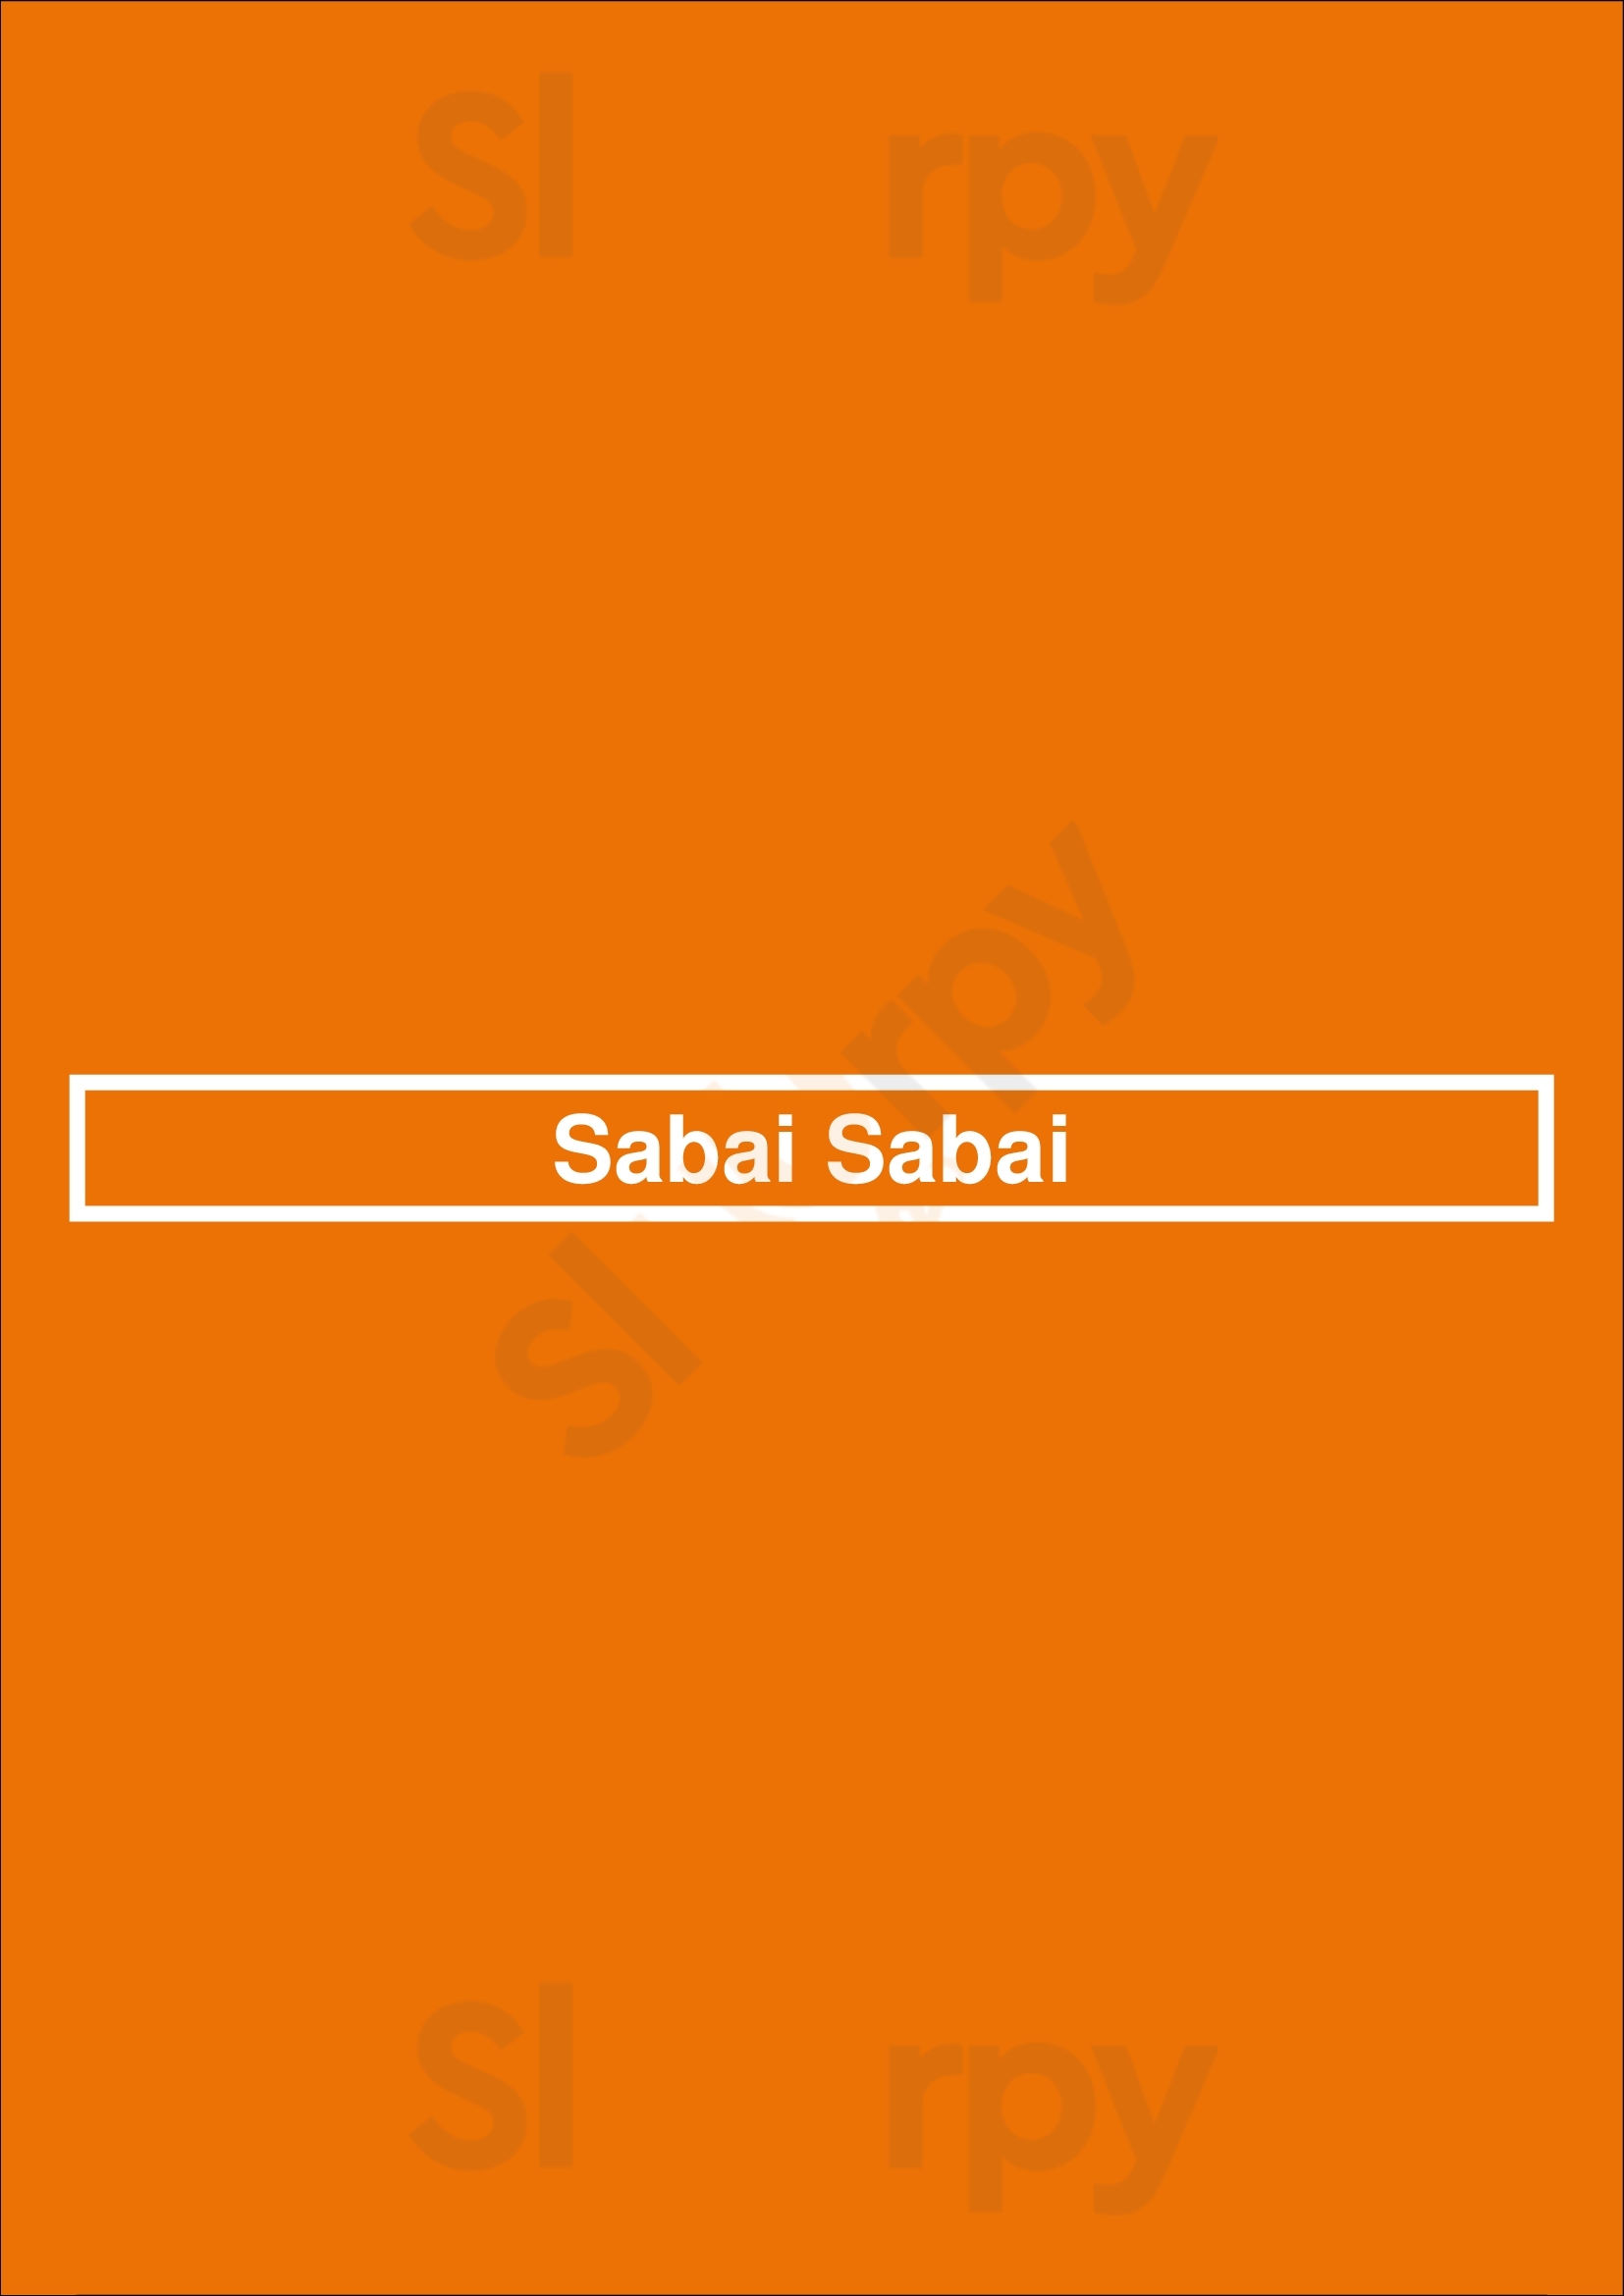 Sabai Sabai Toronto Menu - 1